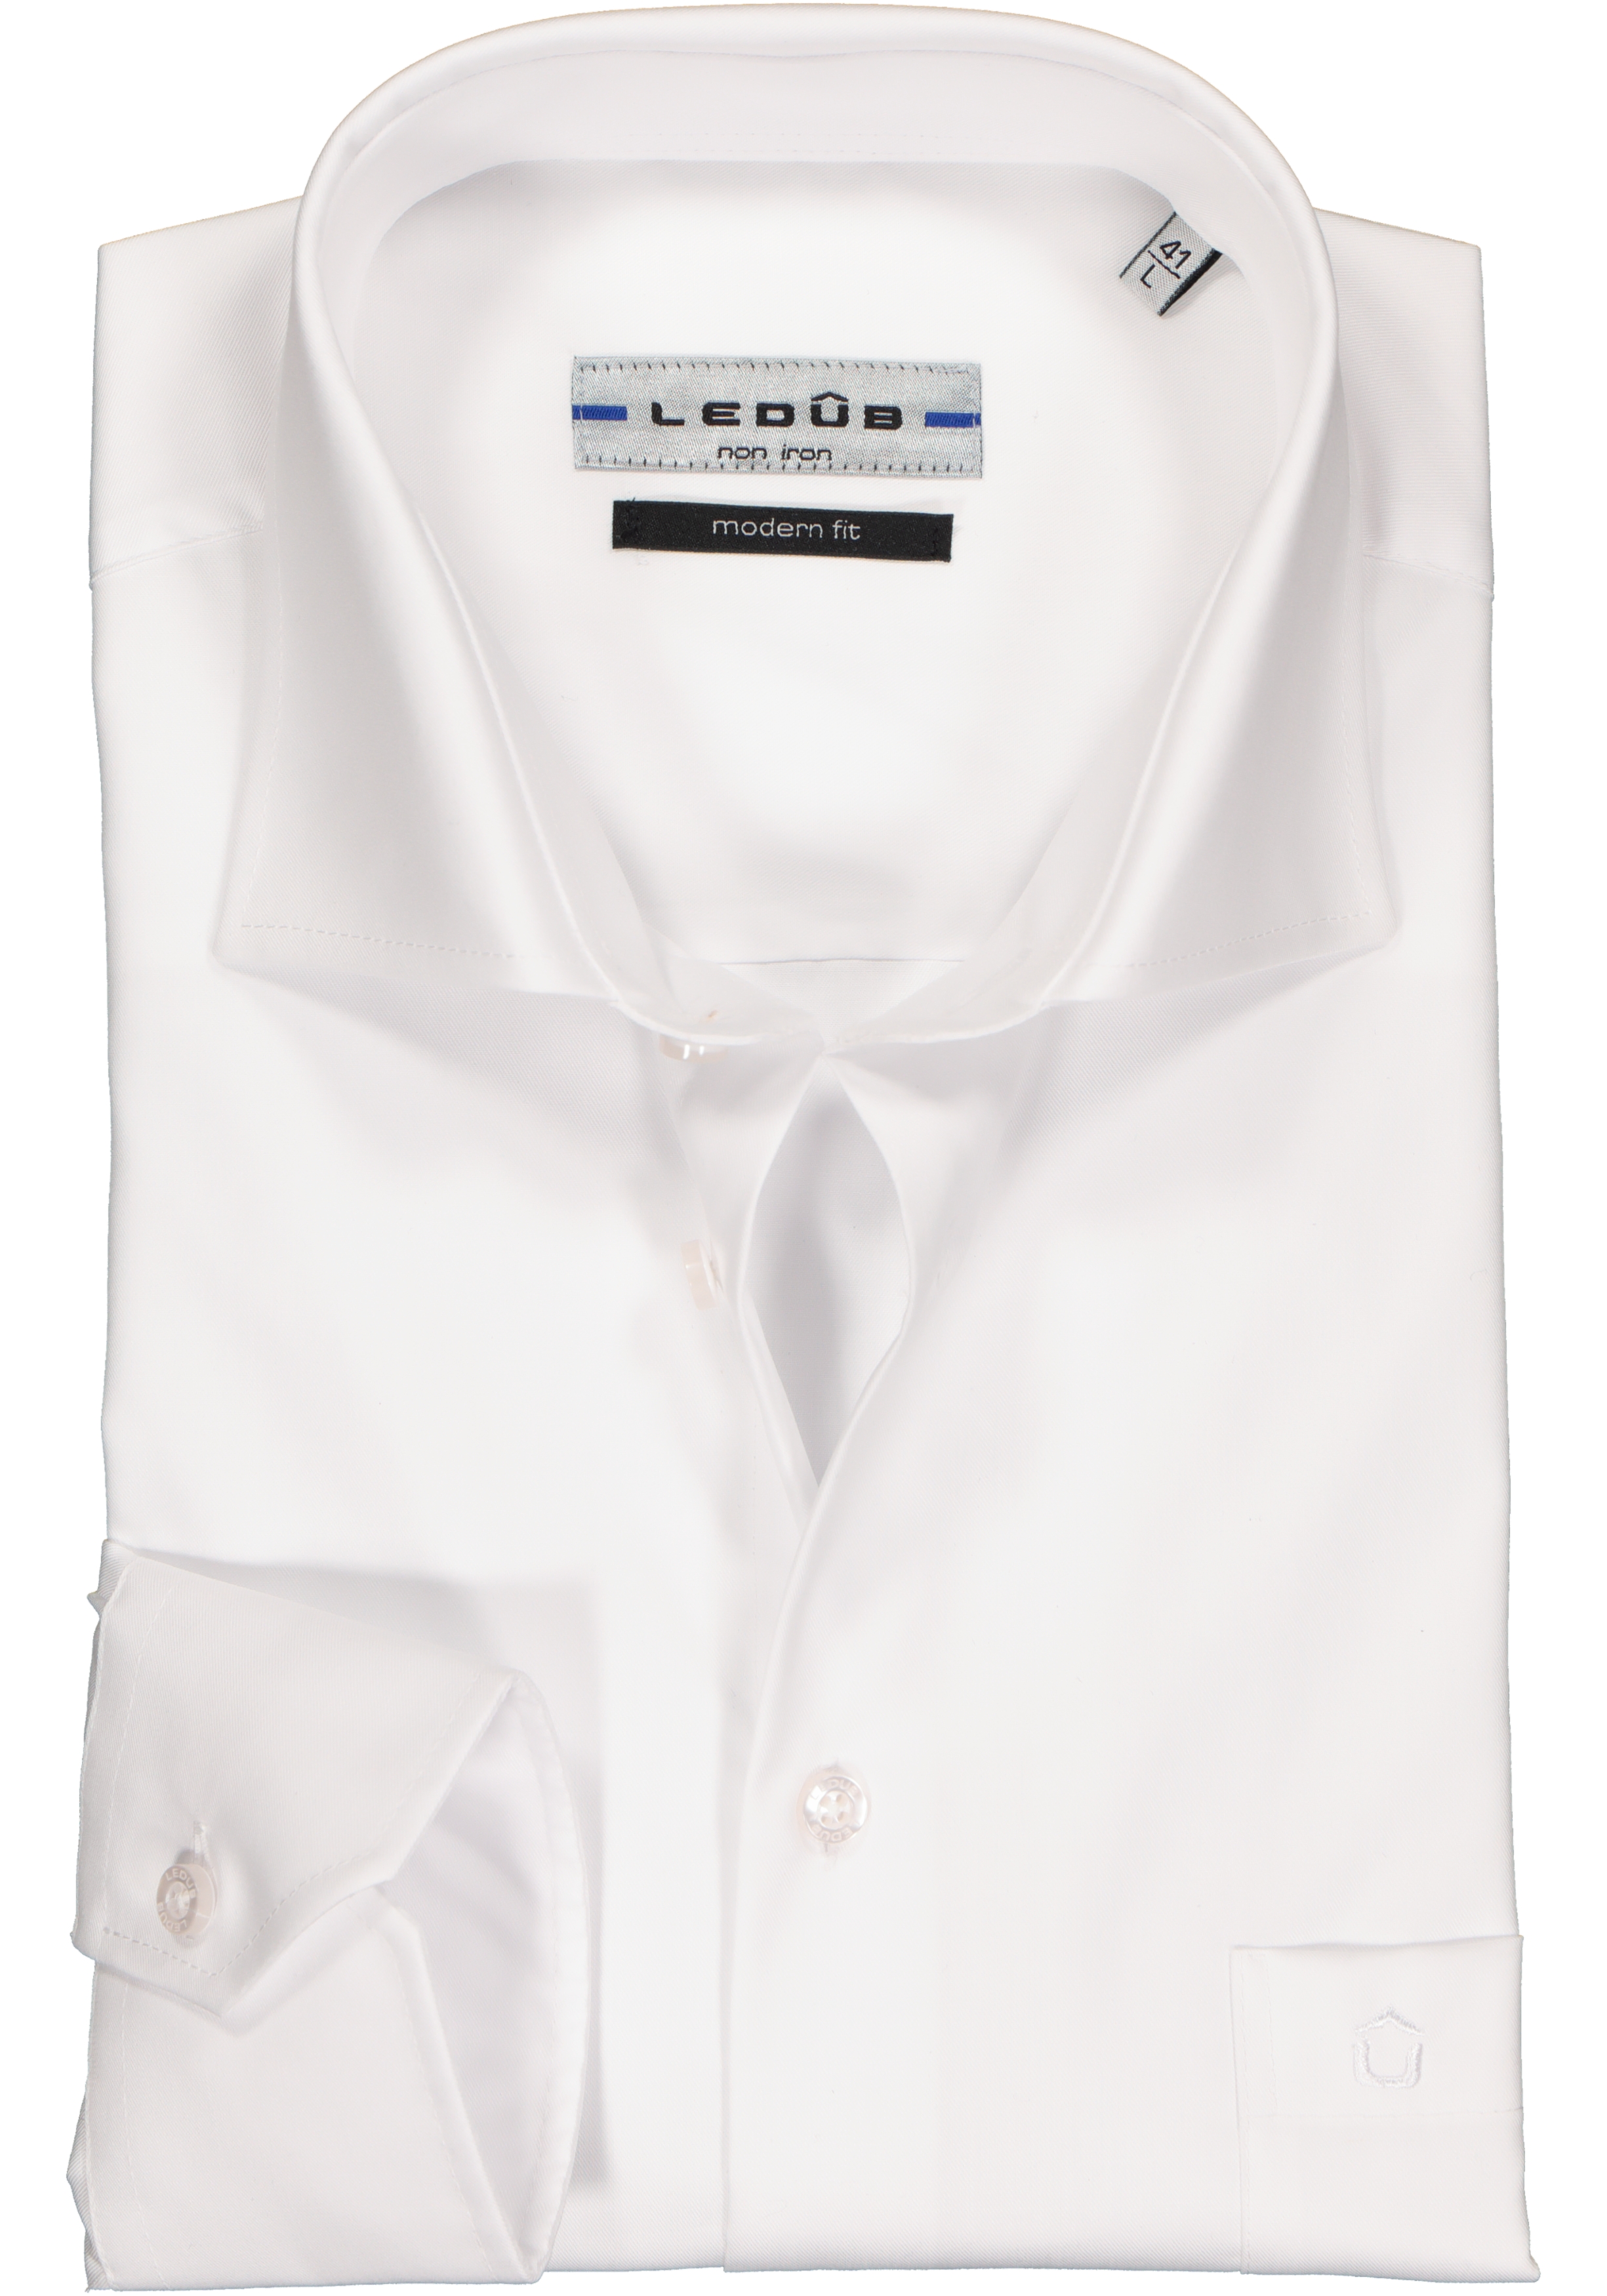 Ledub modern fit overhemd, mouwlengte 7, wit twill 